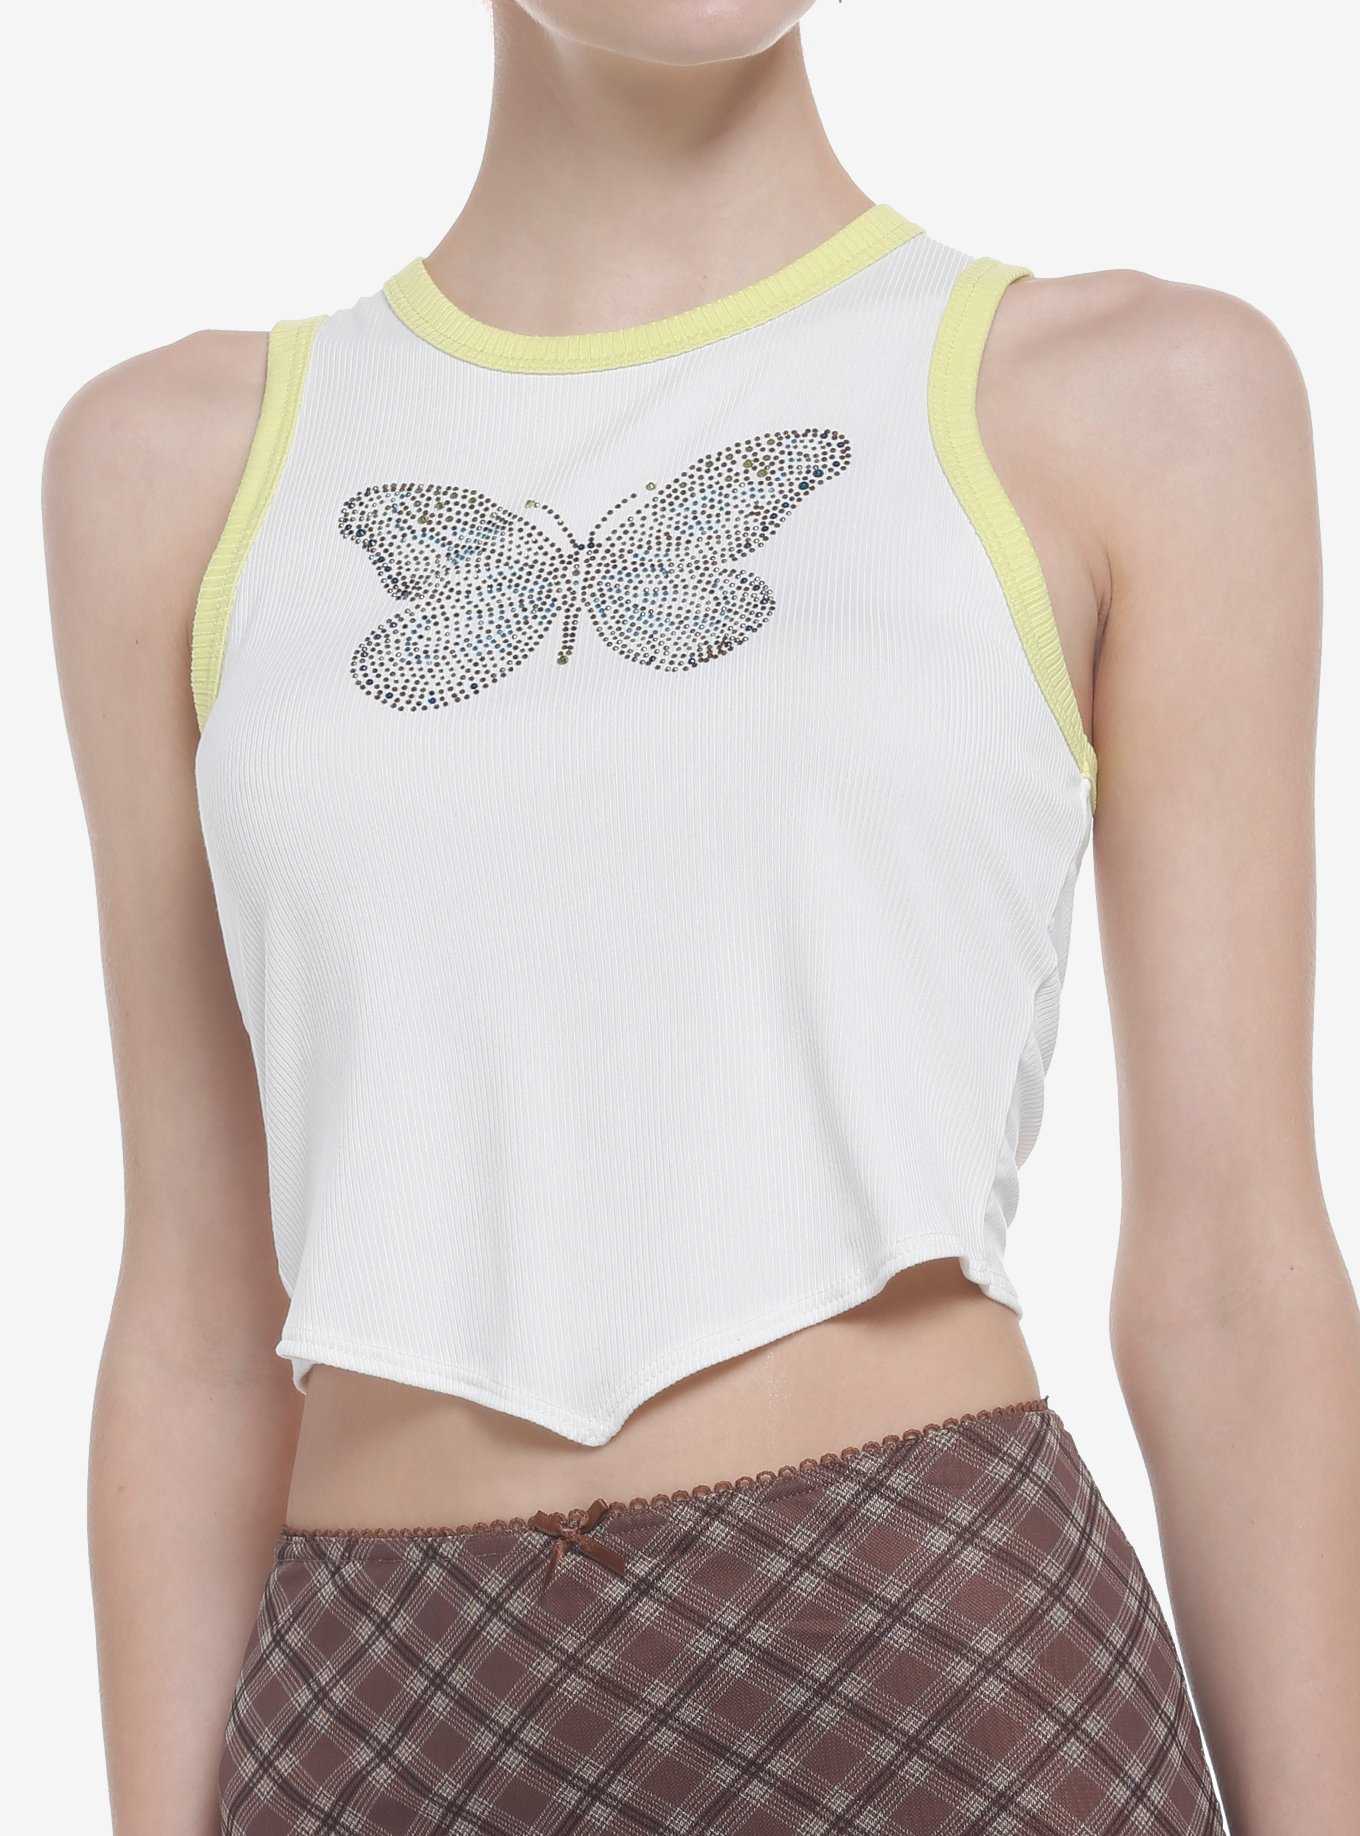 Butterfly Jewels Girls Crop Tank top, , hi-res